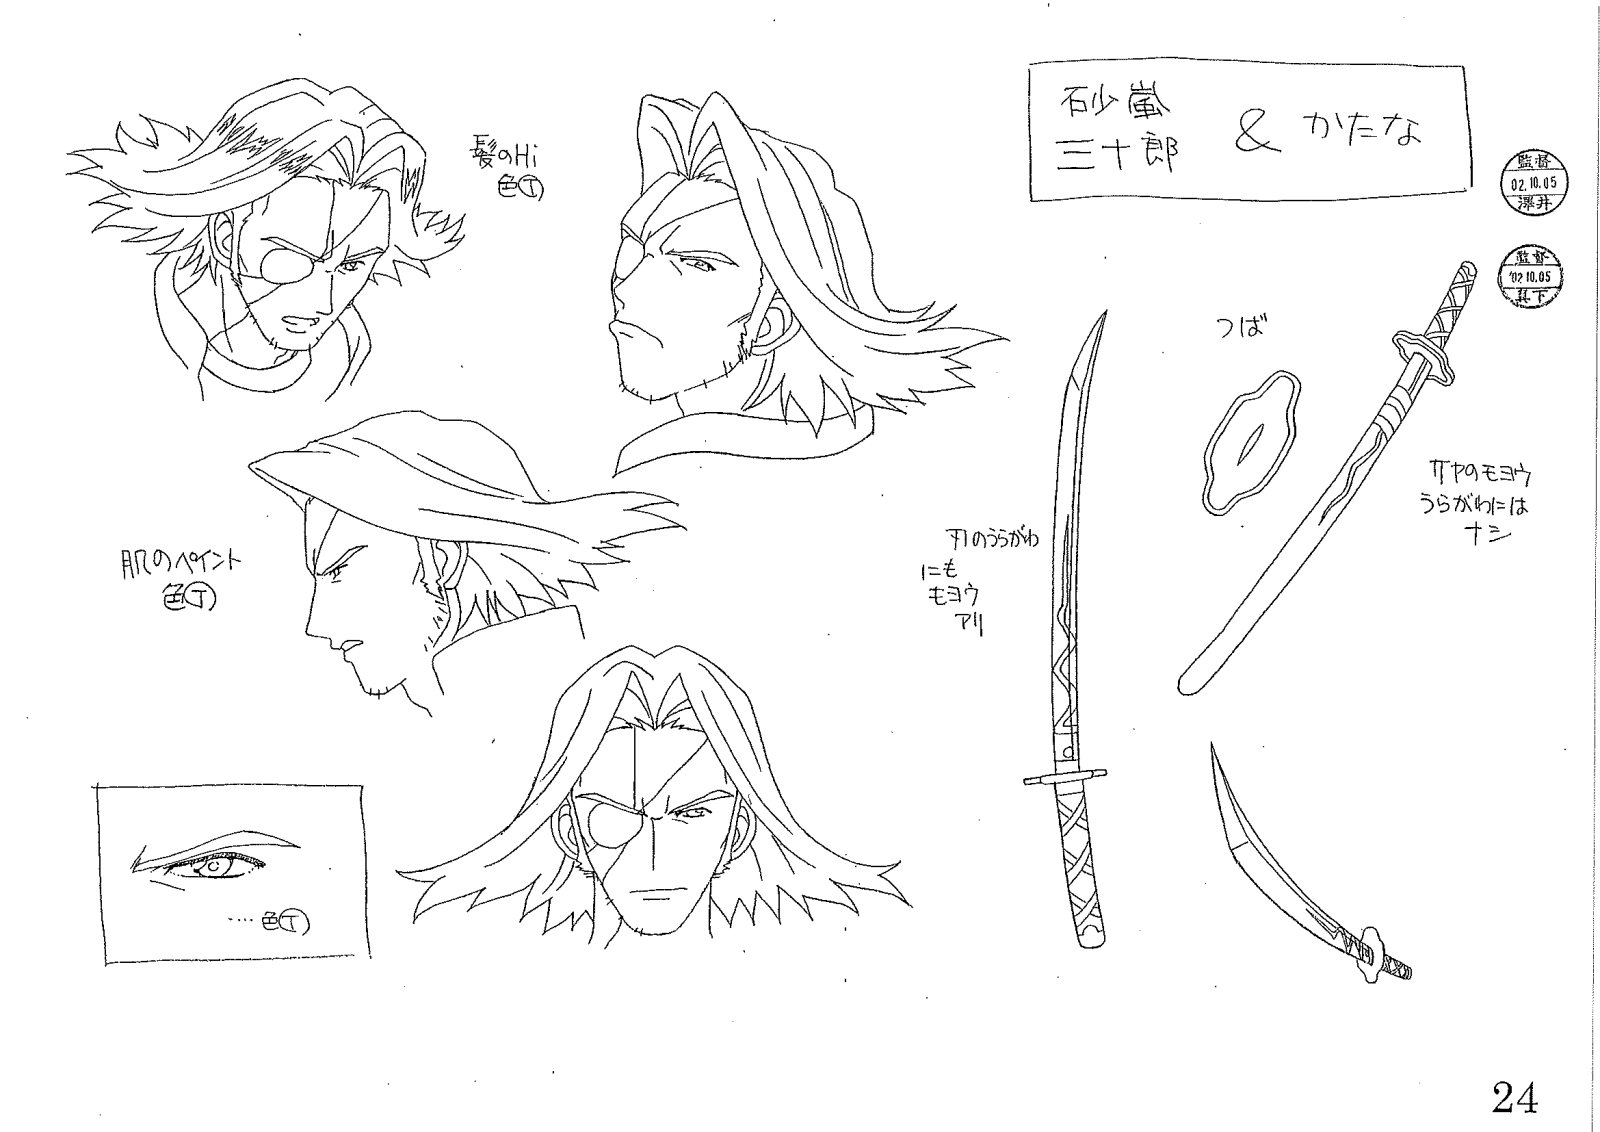 Sanjuro & Sanjuro's Sword